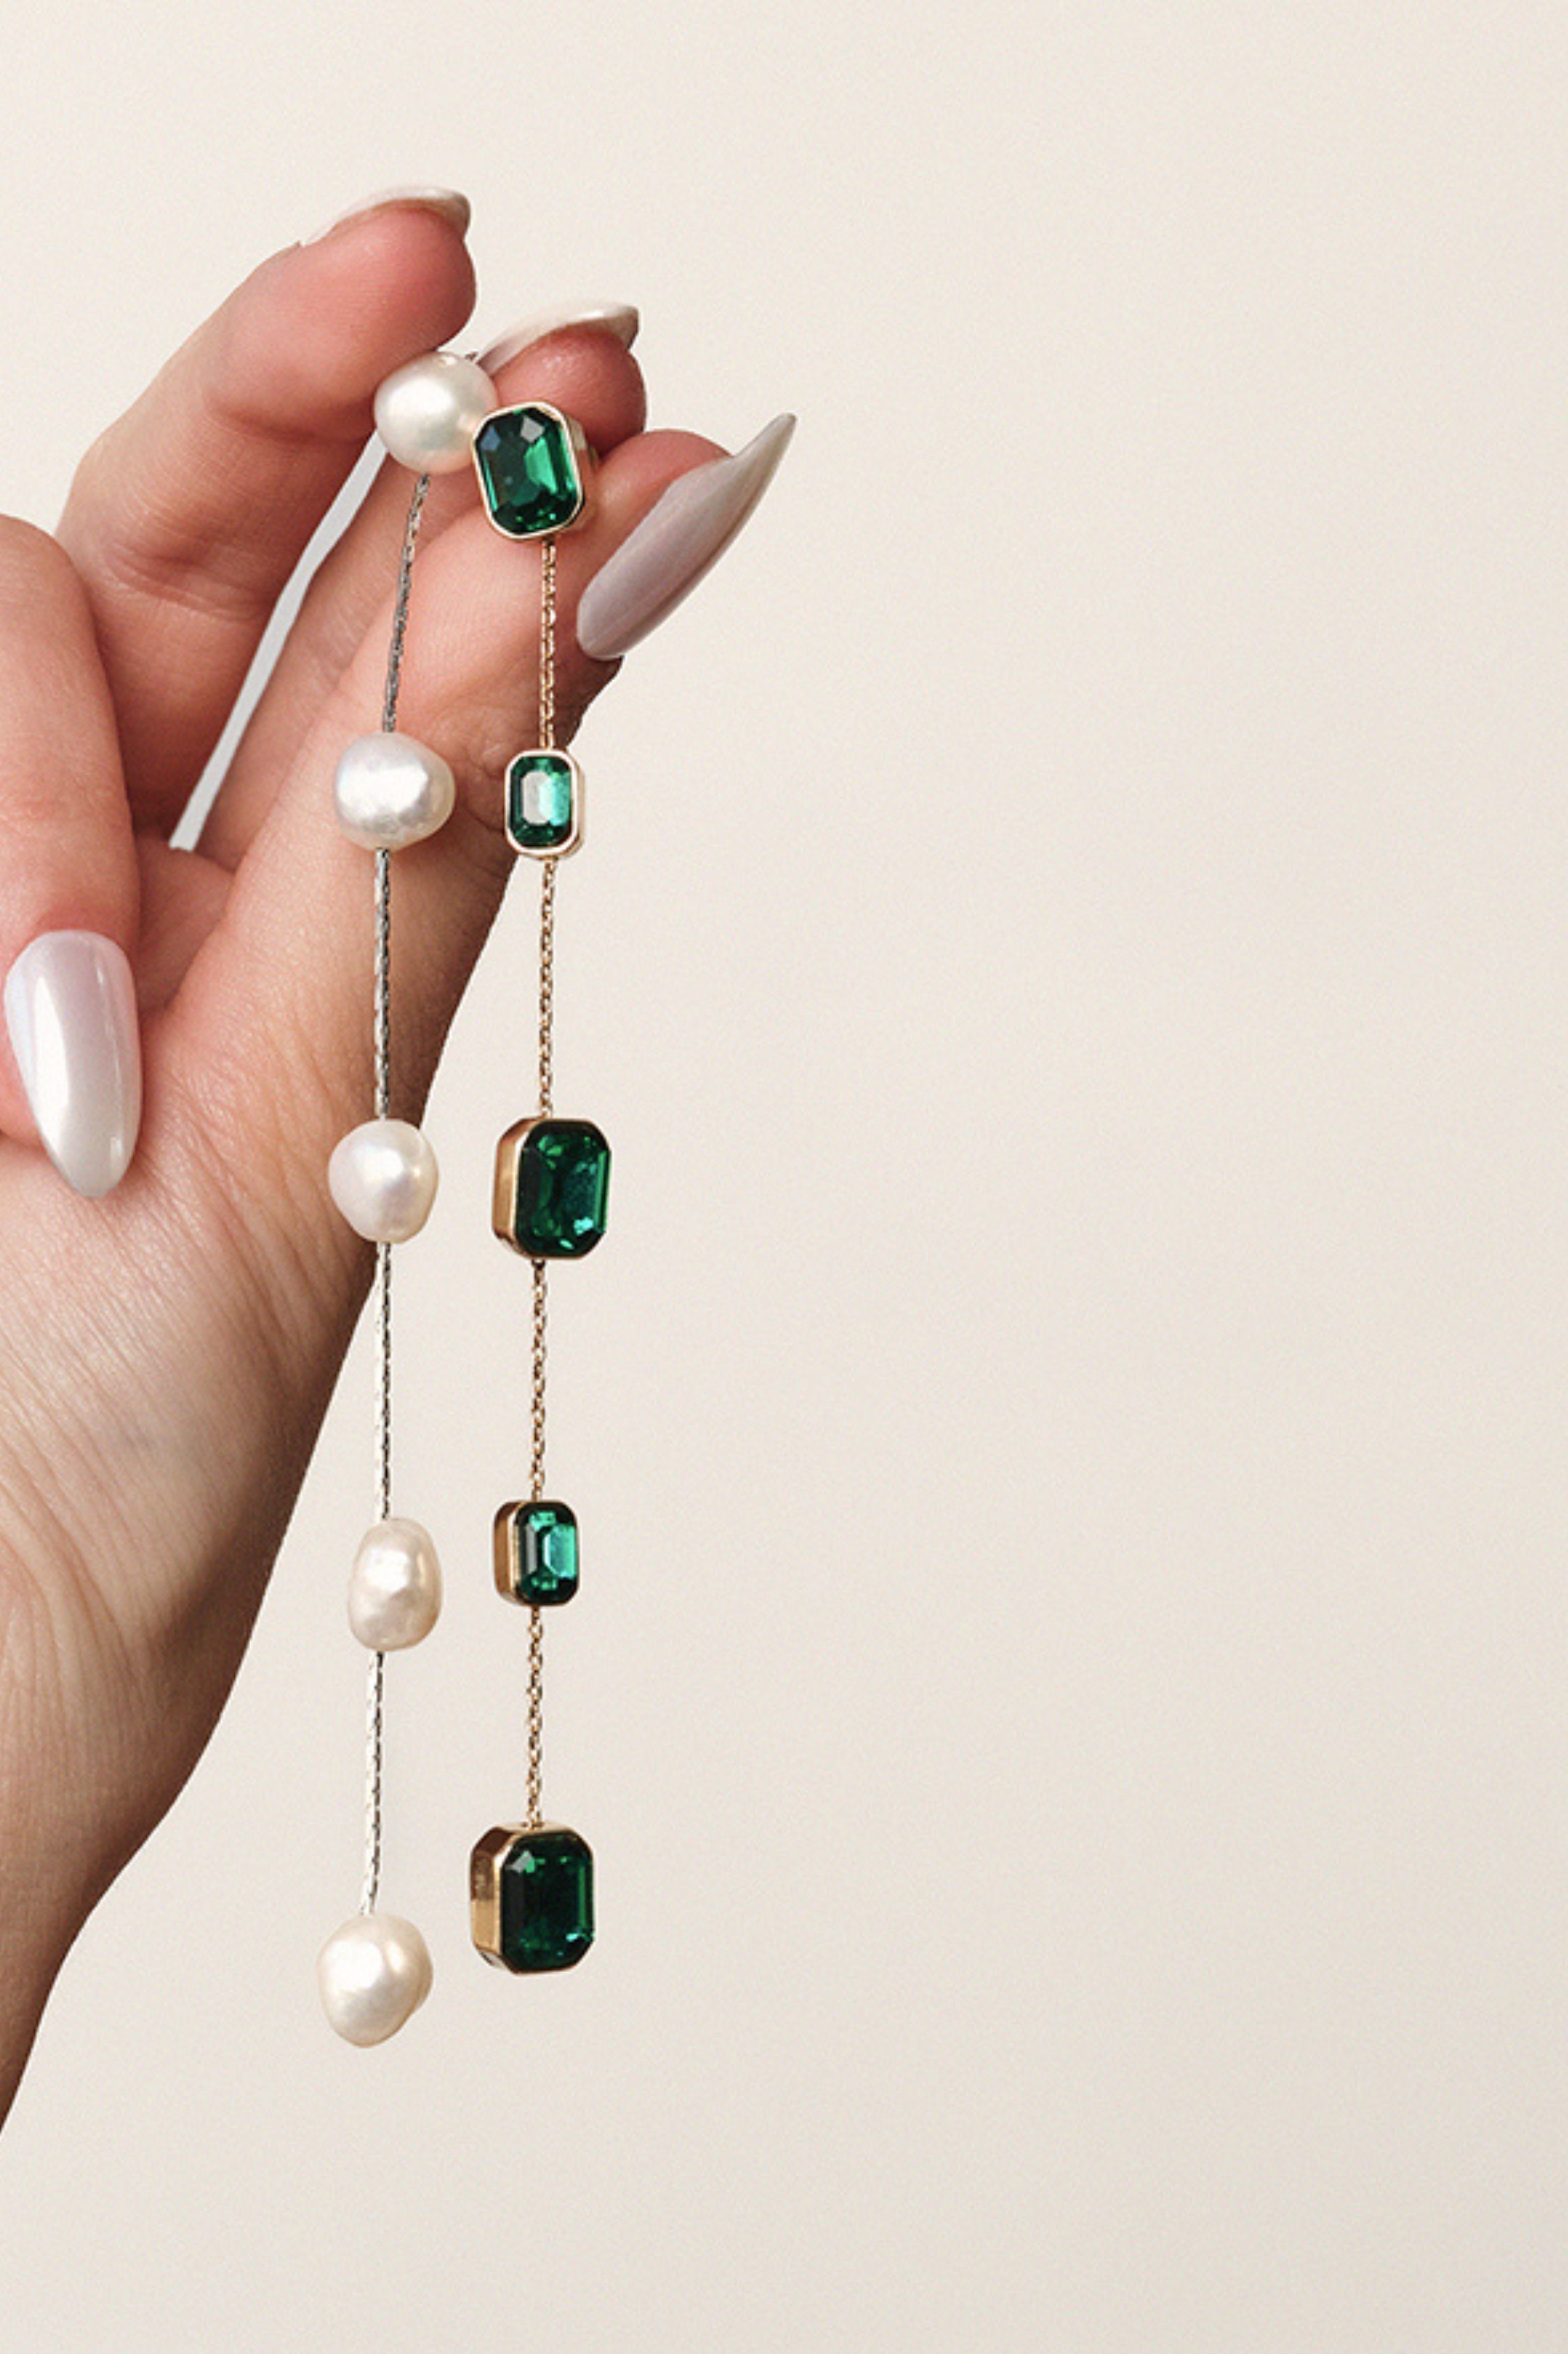 Jewelry, 10 Designer Charms Wholesale Bundle Bracelet